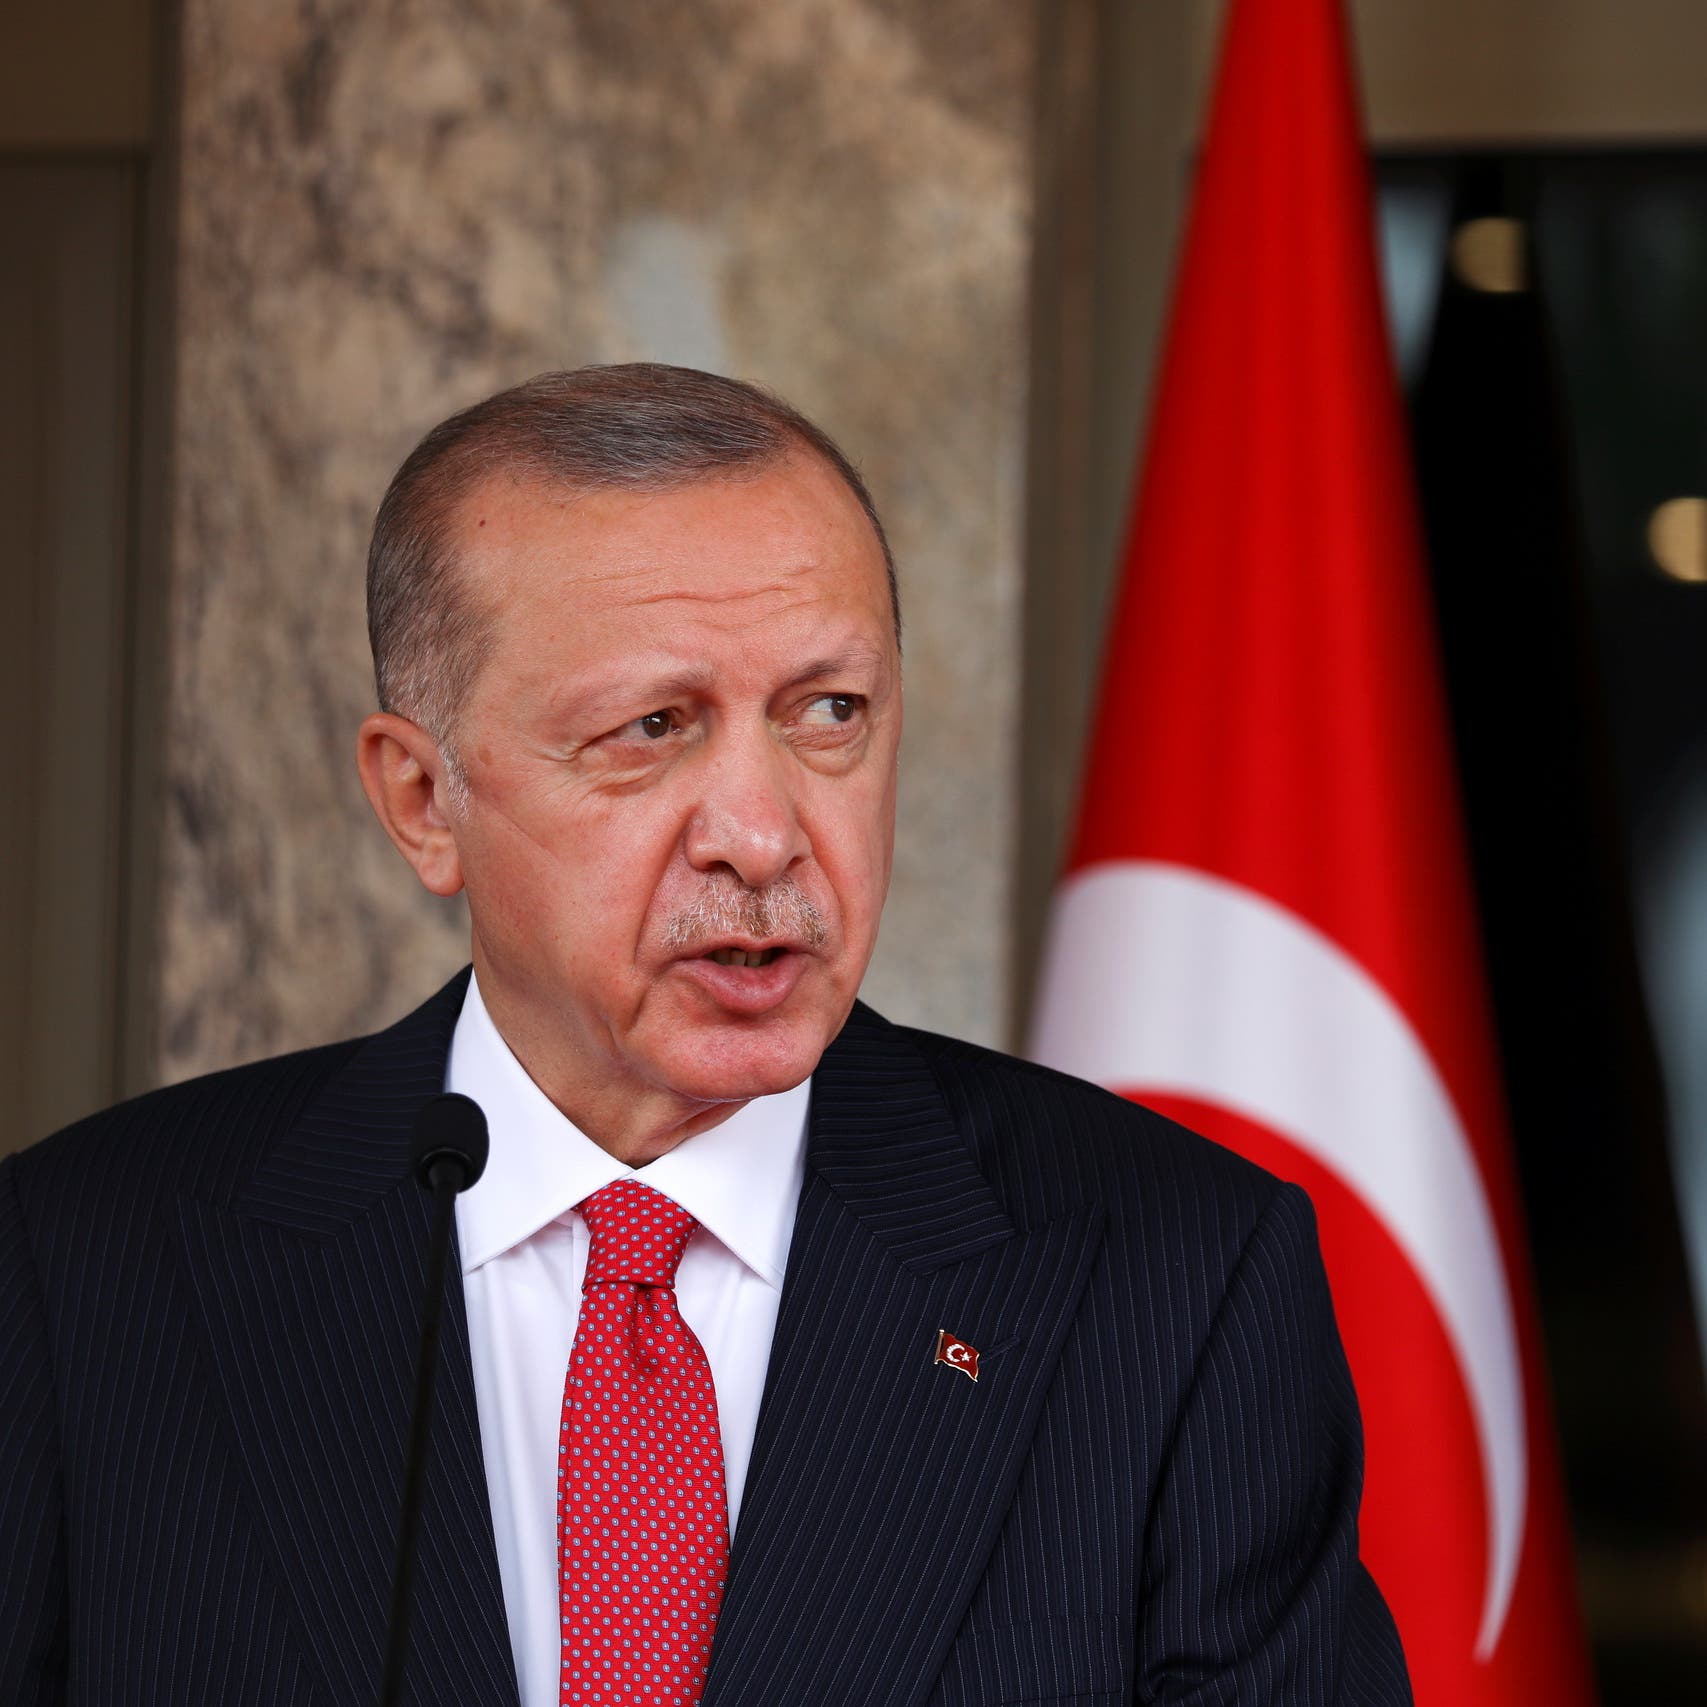 أردوغان يهدد بطرد سفراء 10 دول بينها أميركا وفرنسا وألمانيا